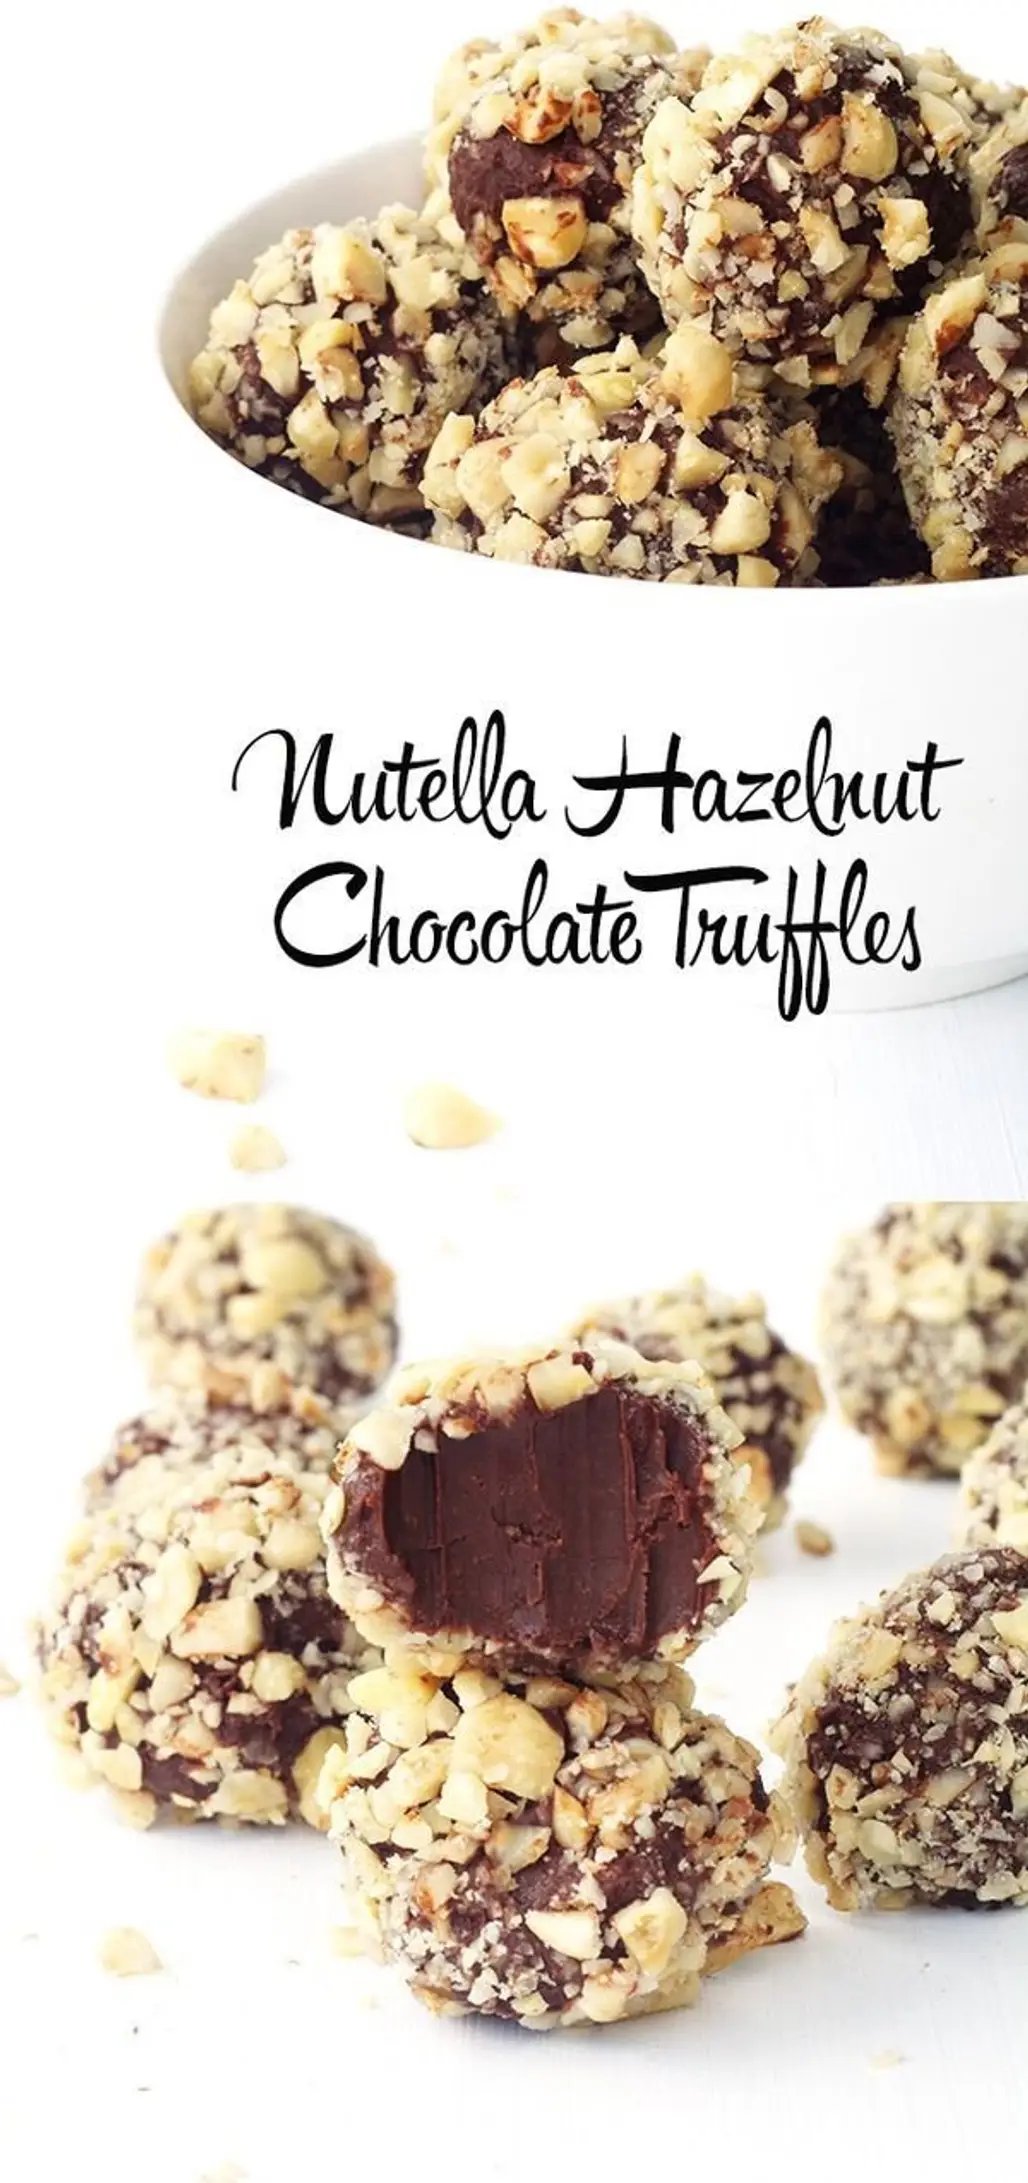 No-bake Nutella Hazelnut Chocolate Truffles